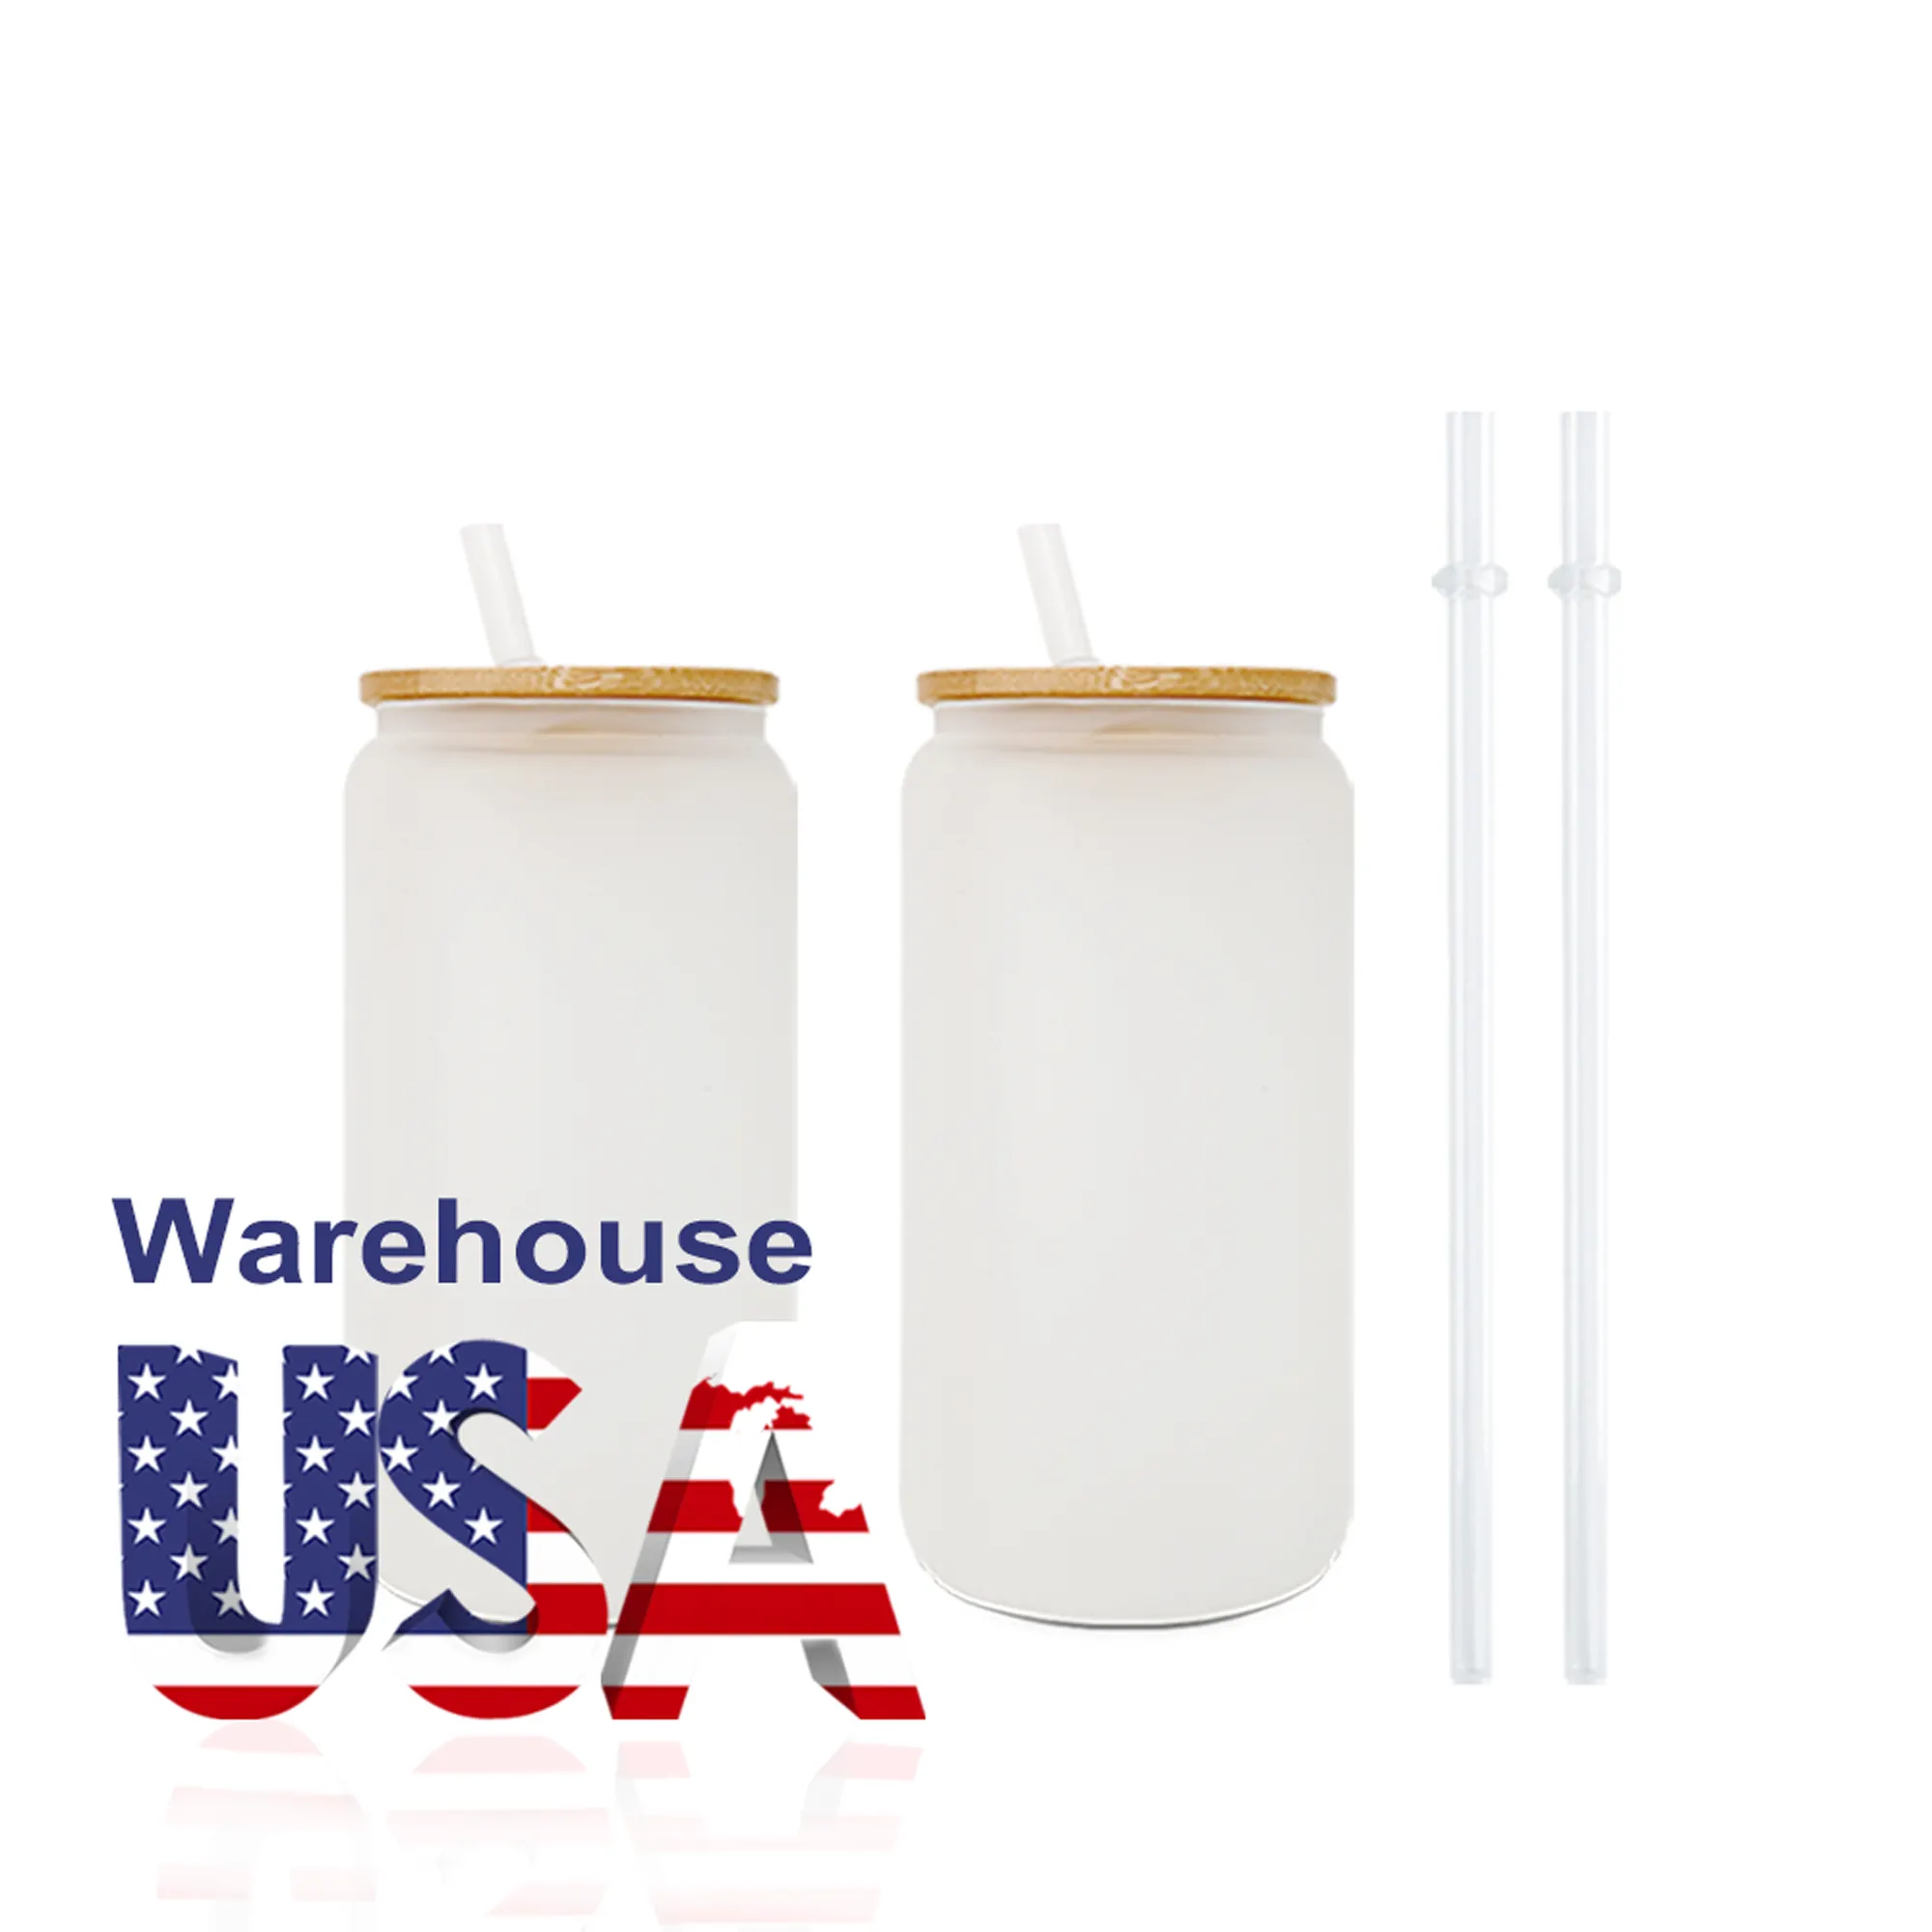 USA Warehouse 12oz 16oz 20oz 25oz昇華ブランクフロストクリアビールグラス缶カップ、竹の蓋とストロー付き